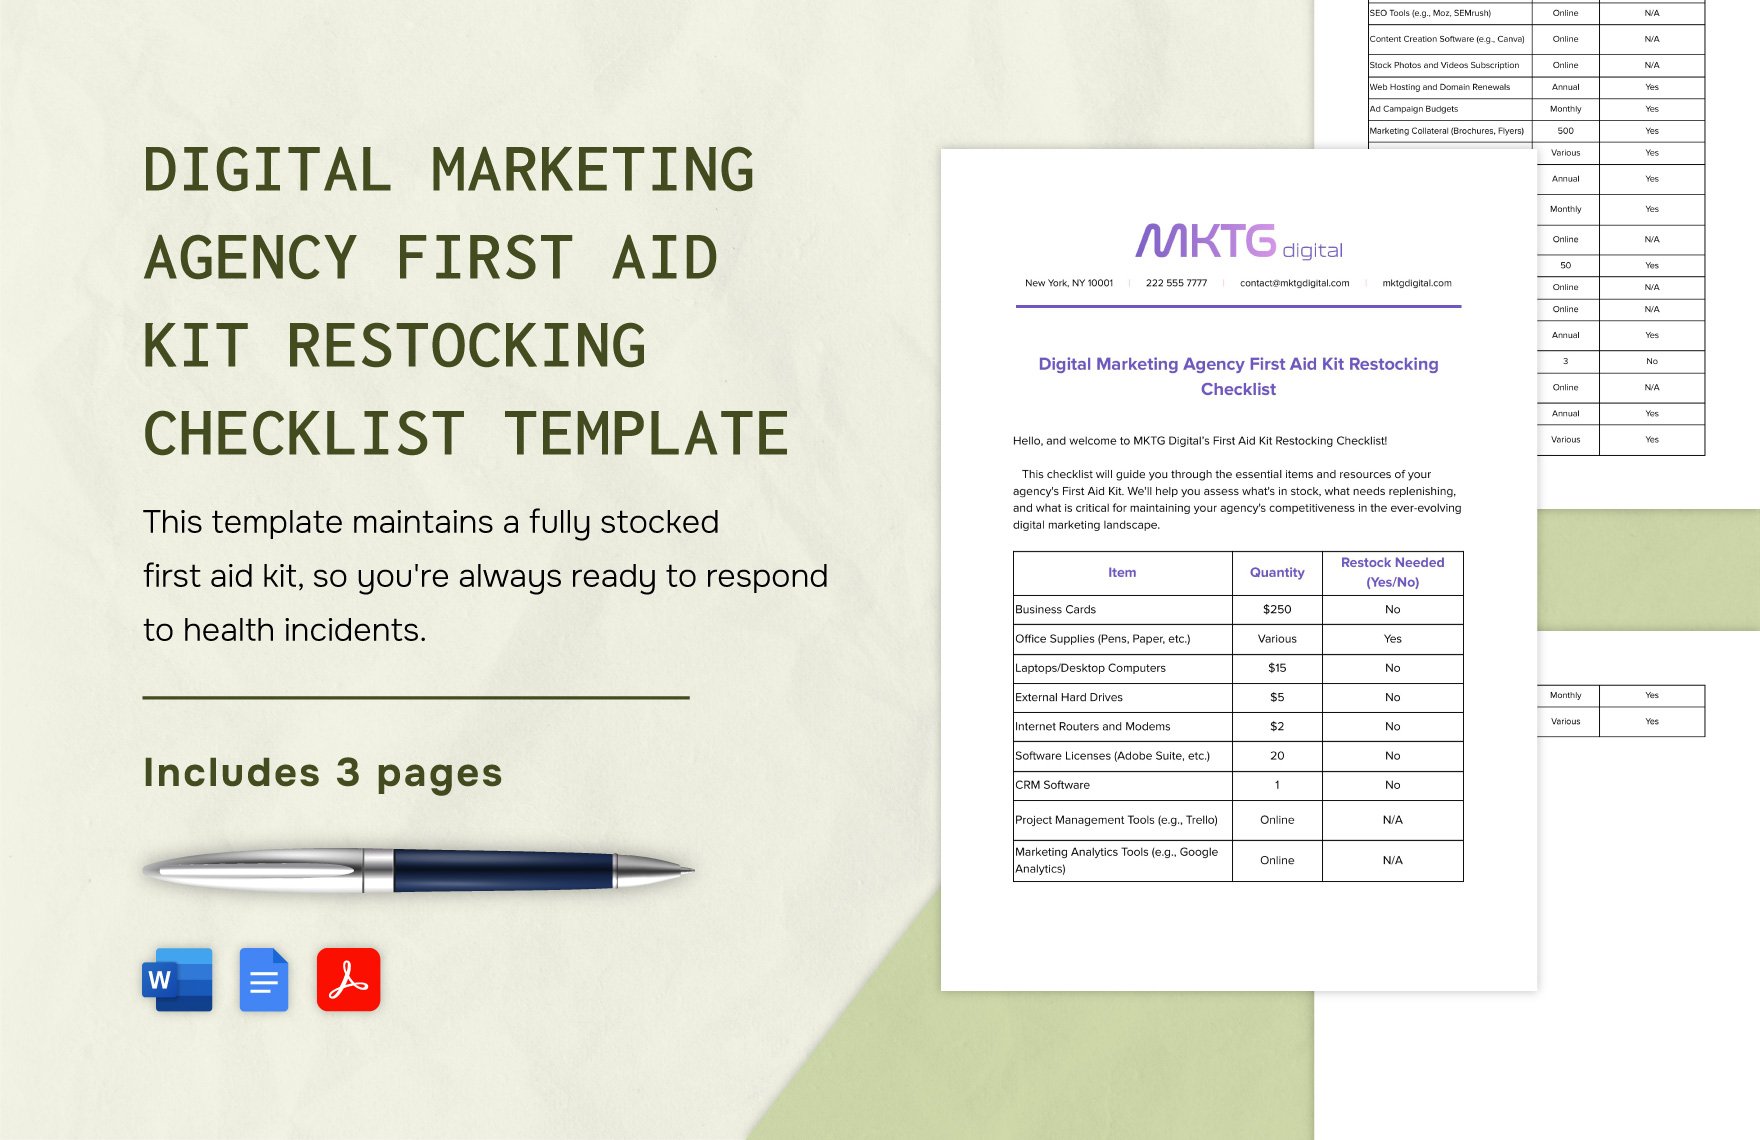 Digital Marketing Agency First Aid Kit Restocking Checklist Template